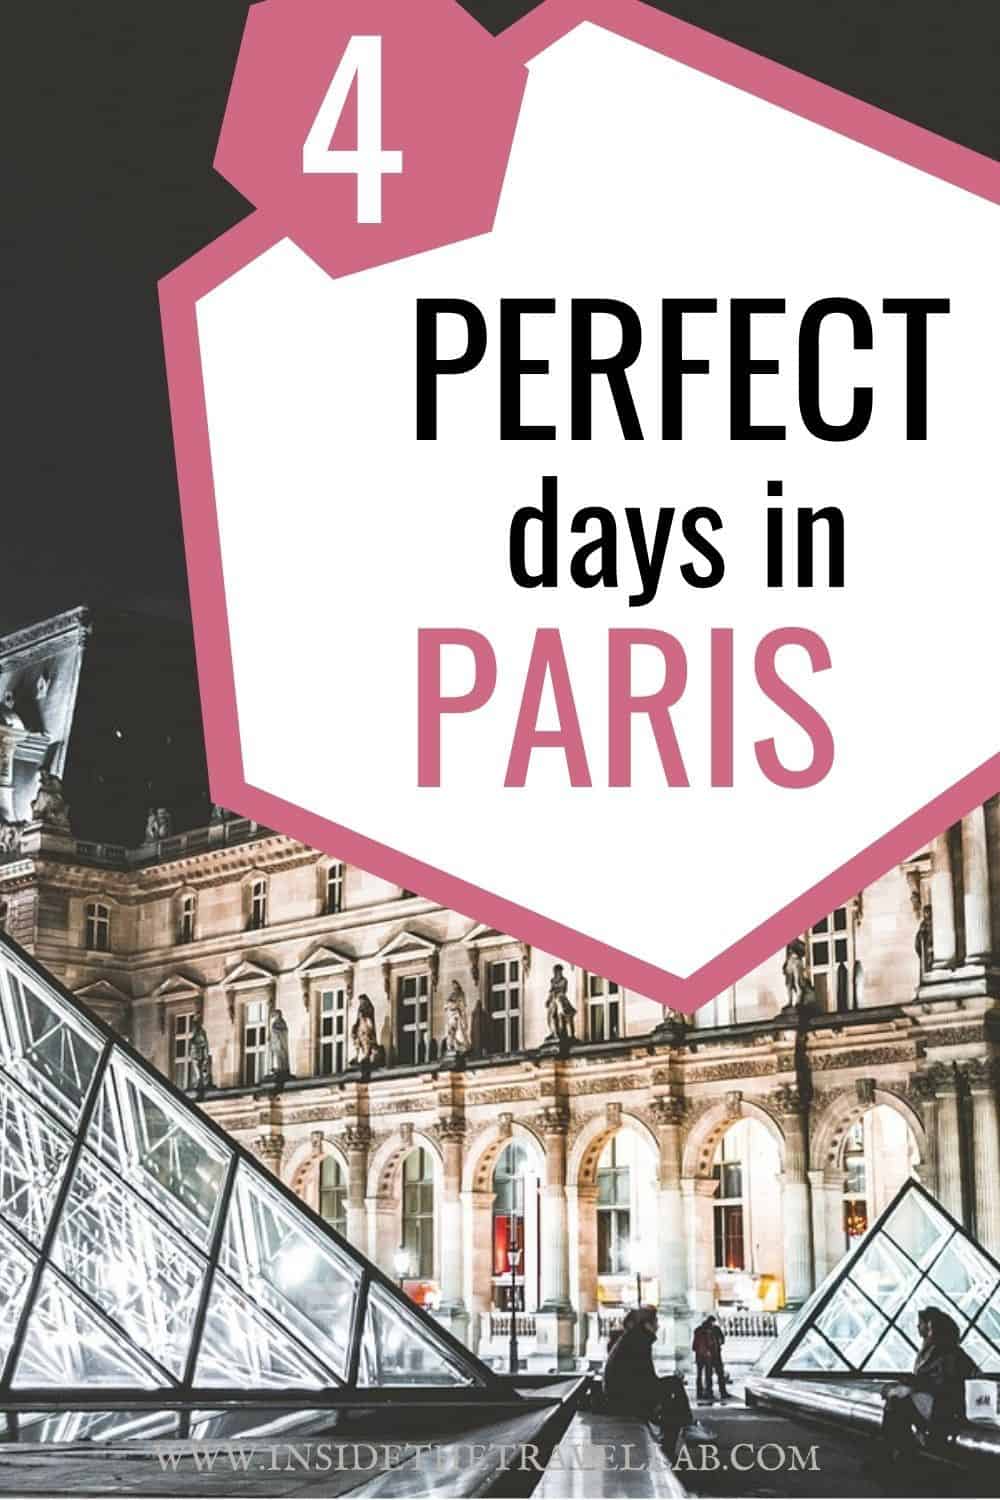 4 days in Paris - Perfect Paris itinerary cover image